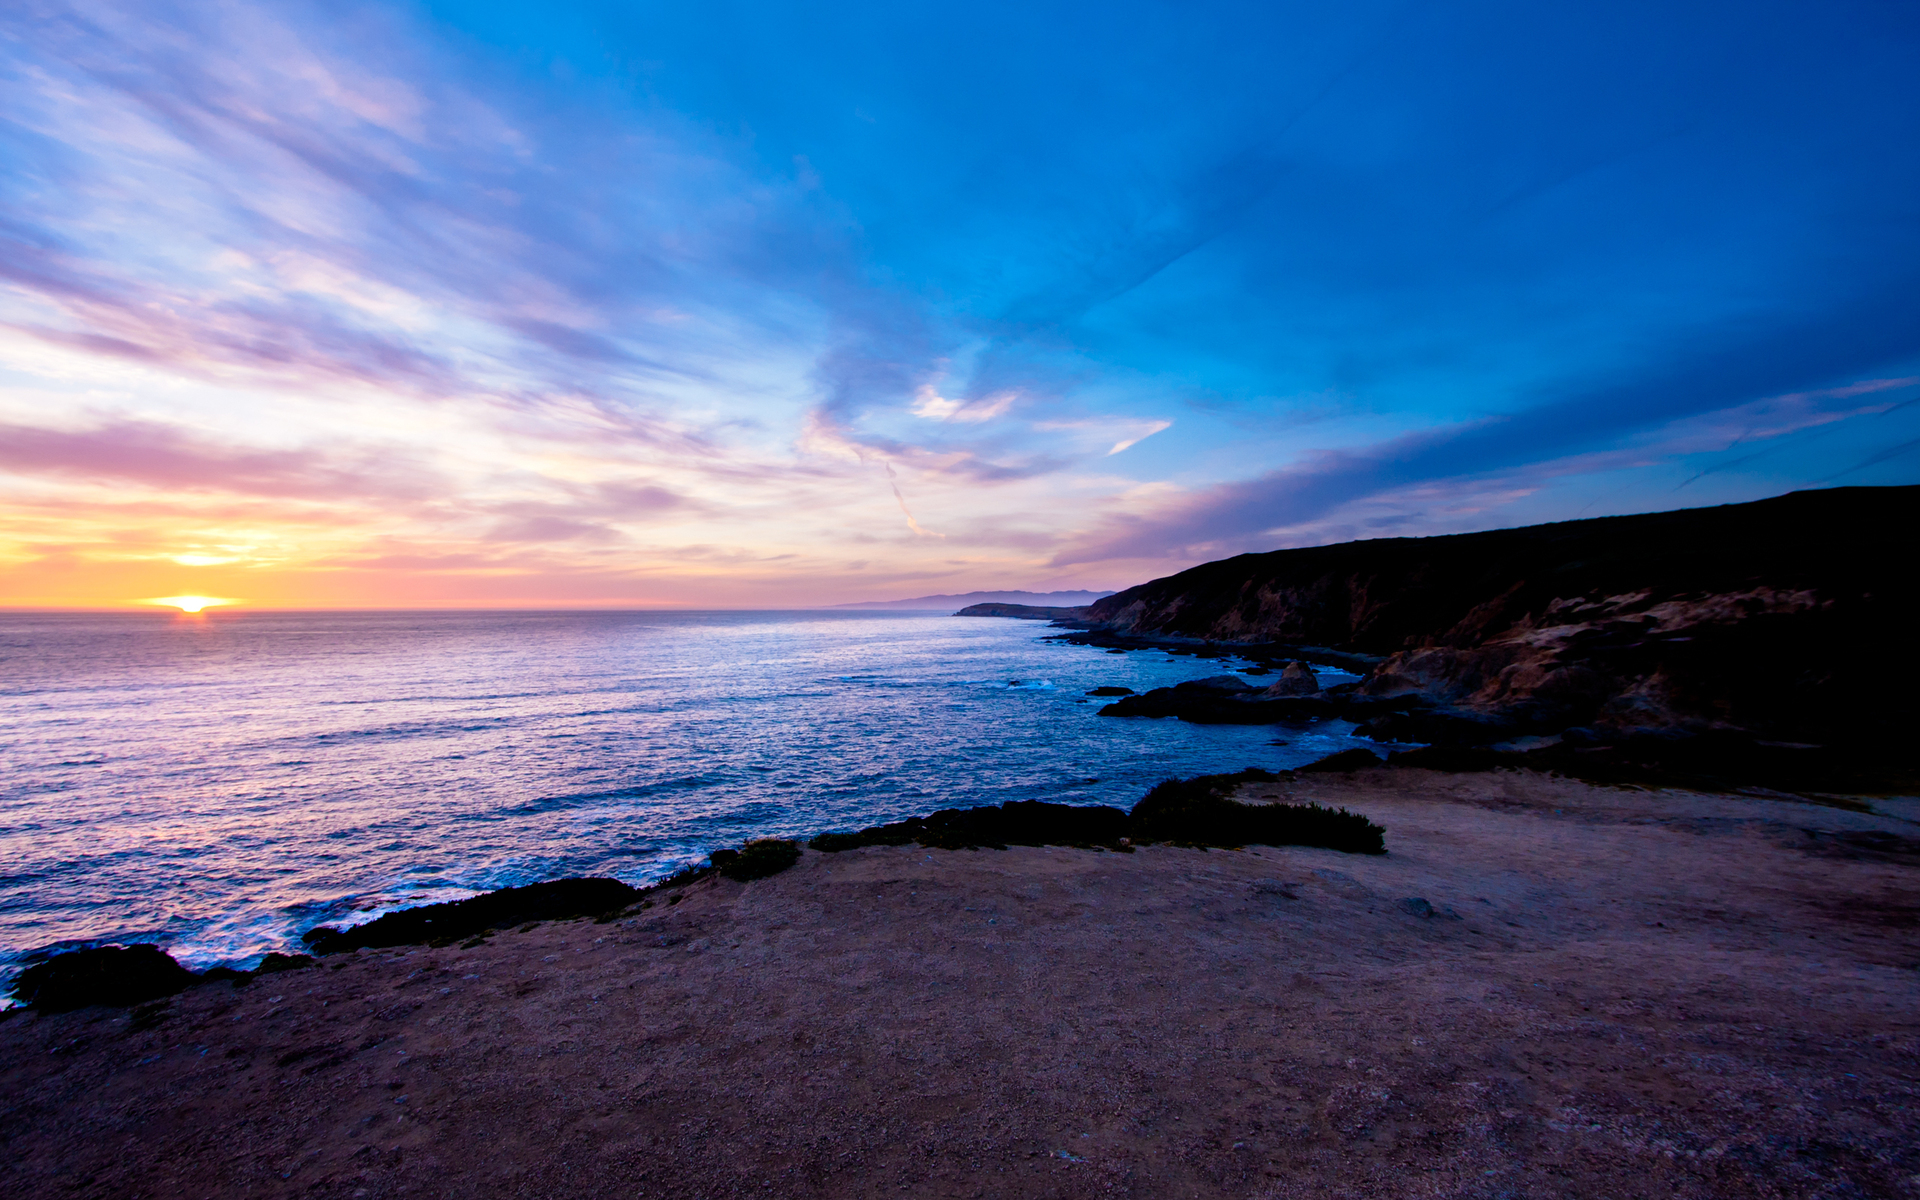  Coast sunset bodega bay california pictures HD Desktop Wallpapers